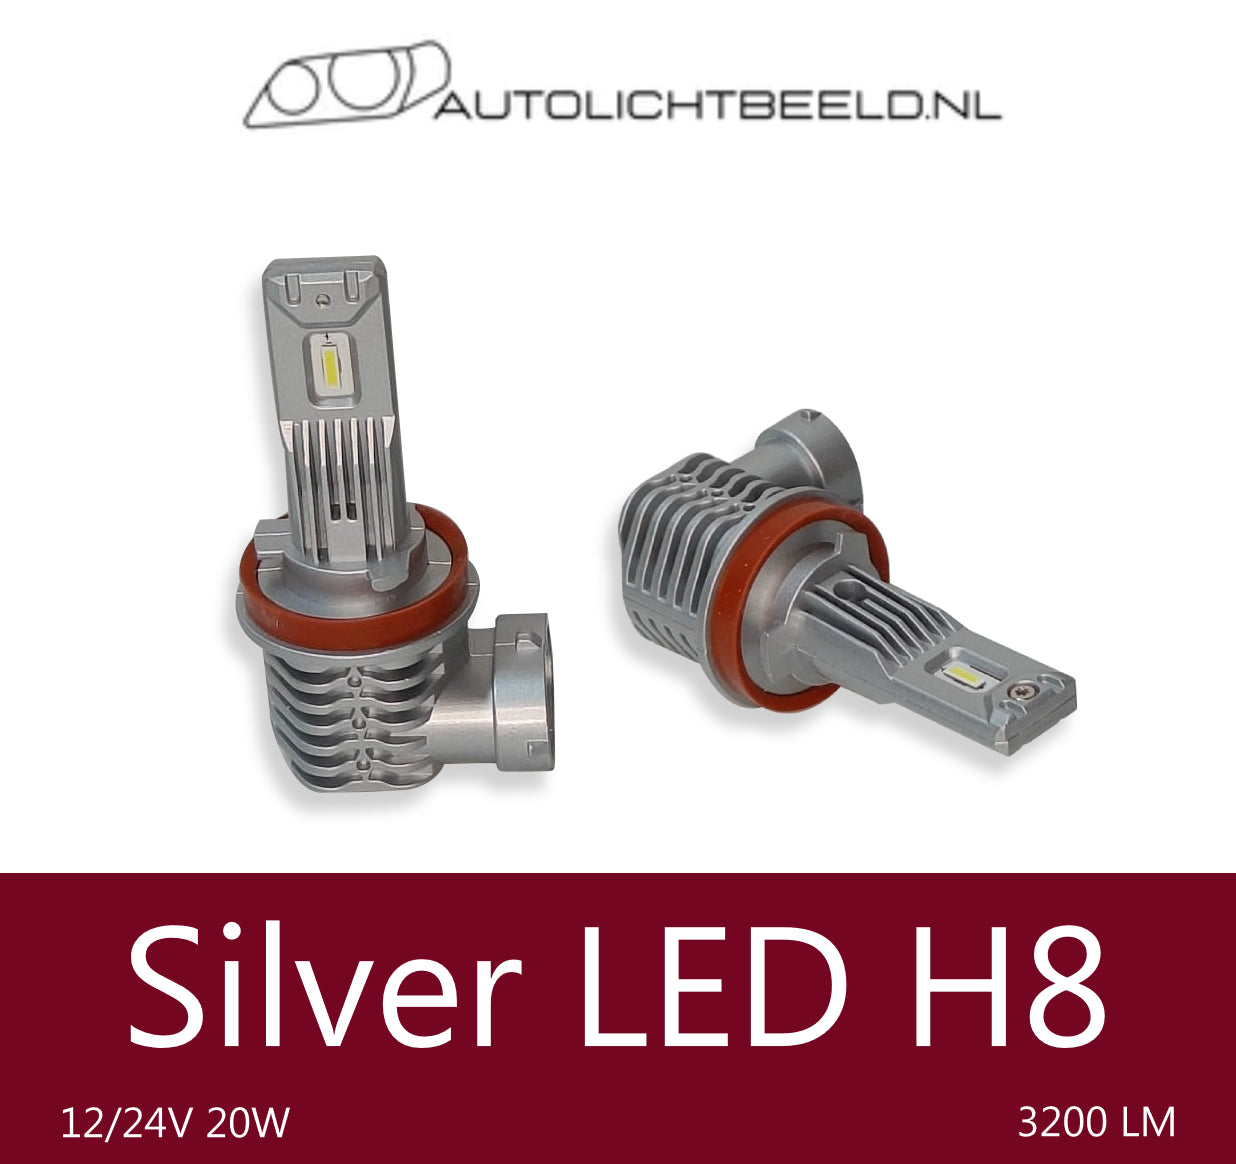 Silver LED H8 - Autolichtbeeld